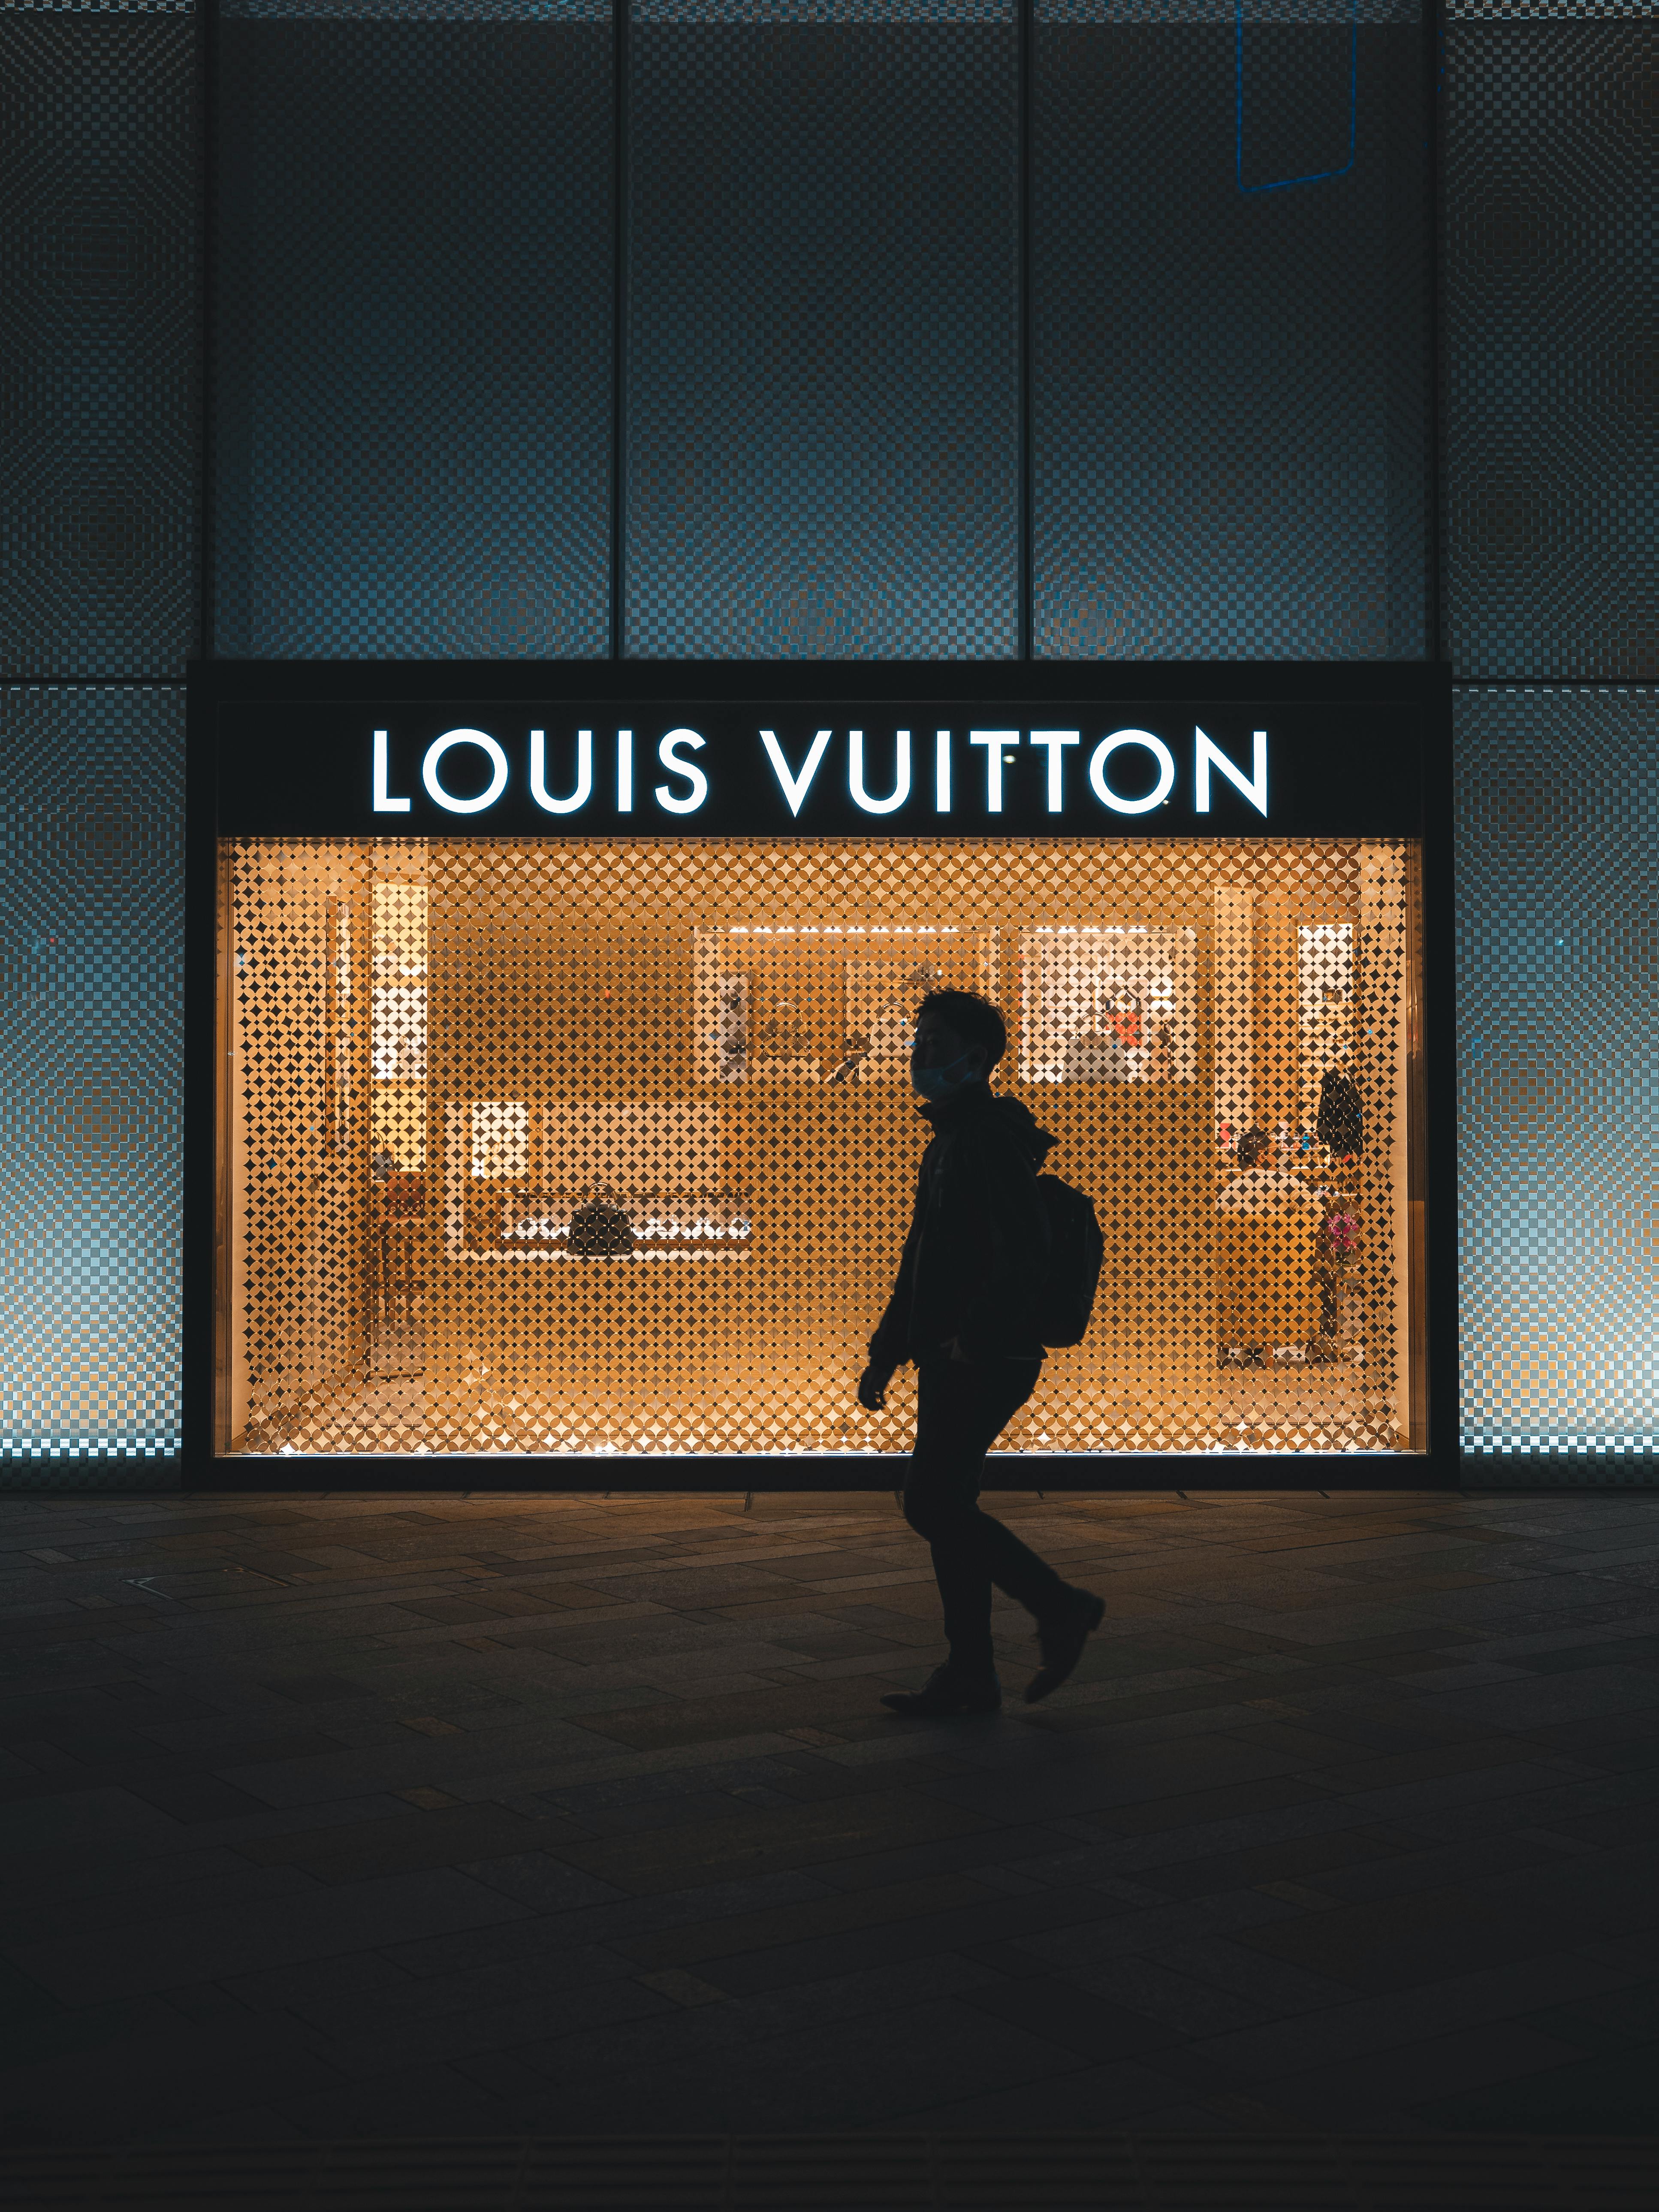 People Walking Near the Louis Vuitton Building · Free Stock Photo